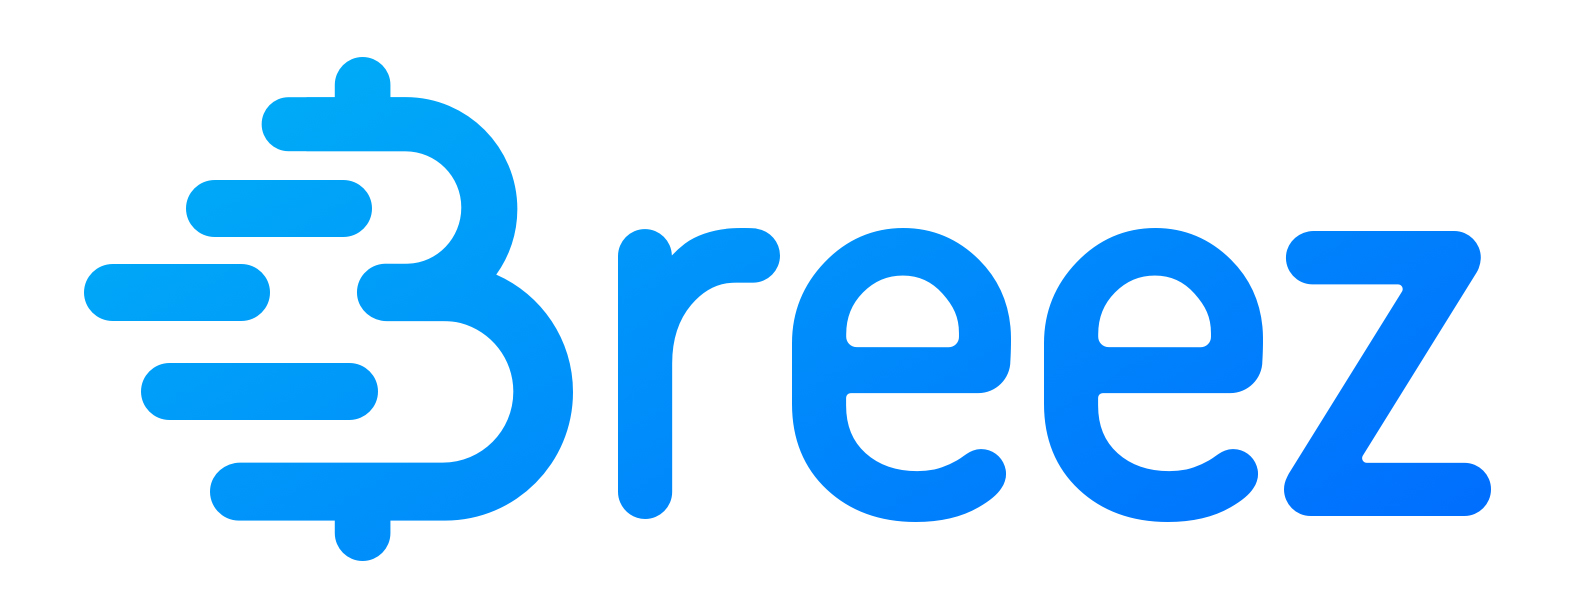 Breez Development Ltd.